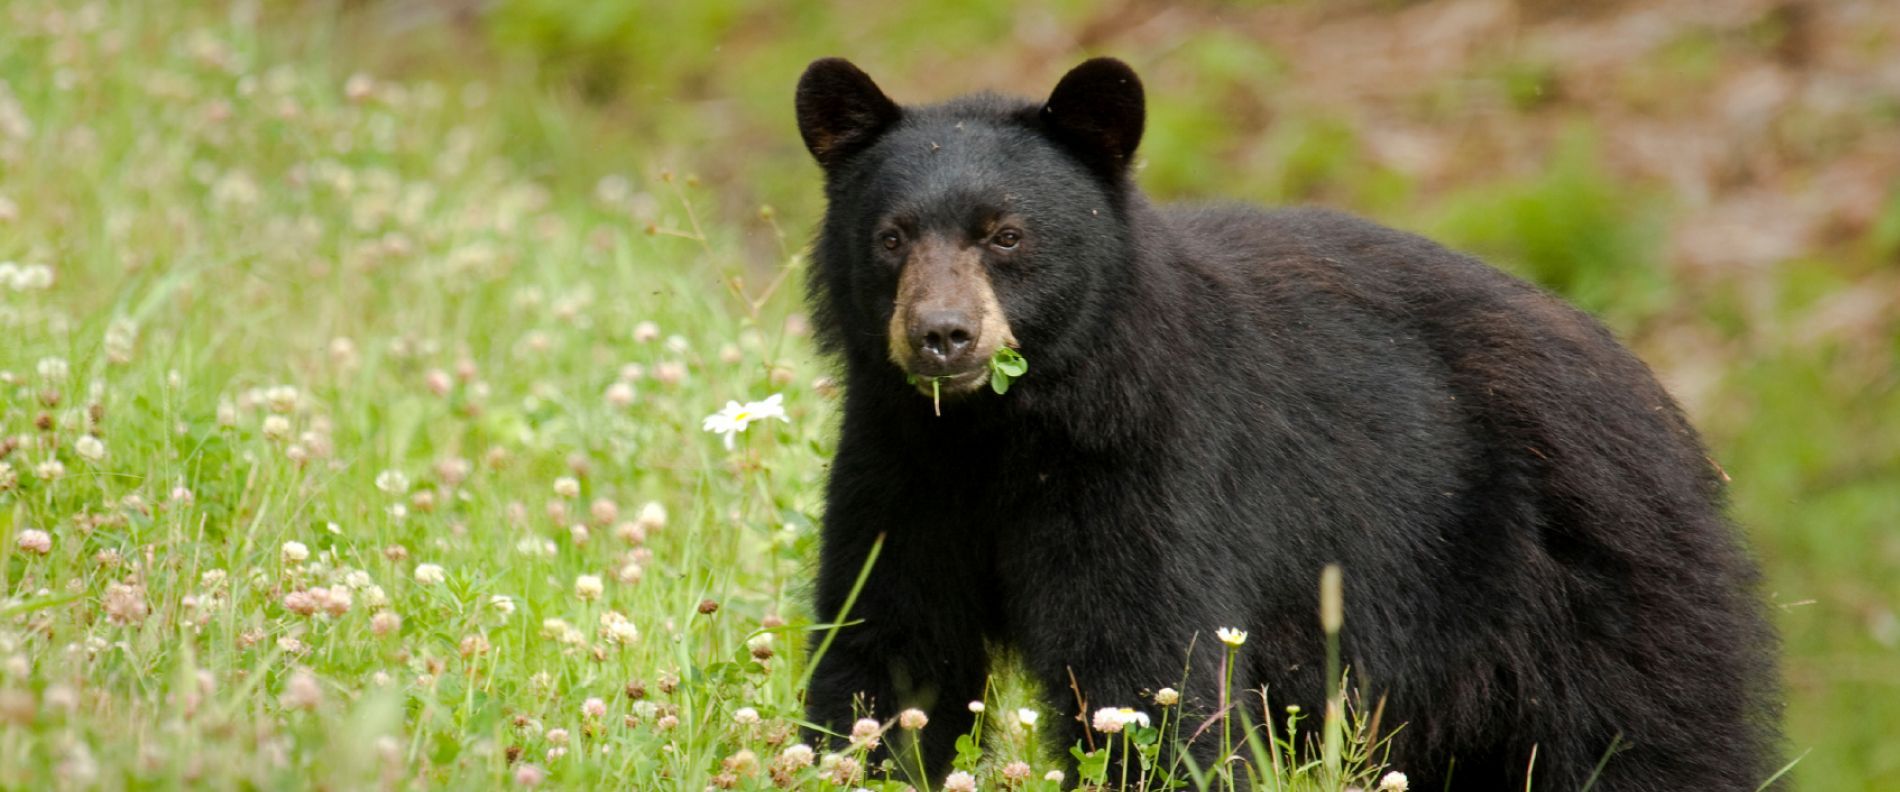 bear eating in a meadow